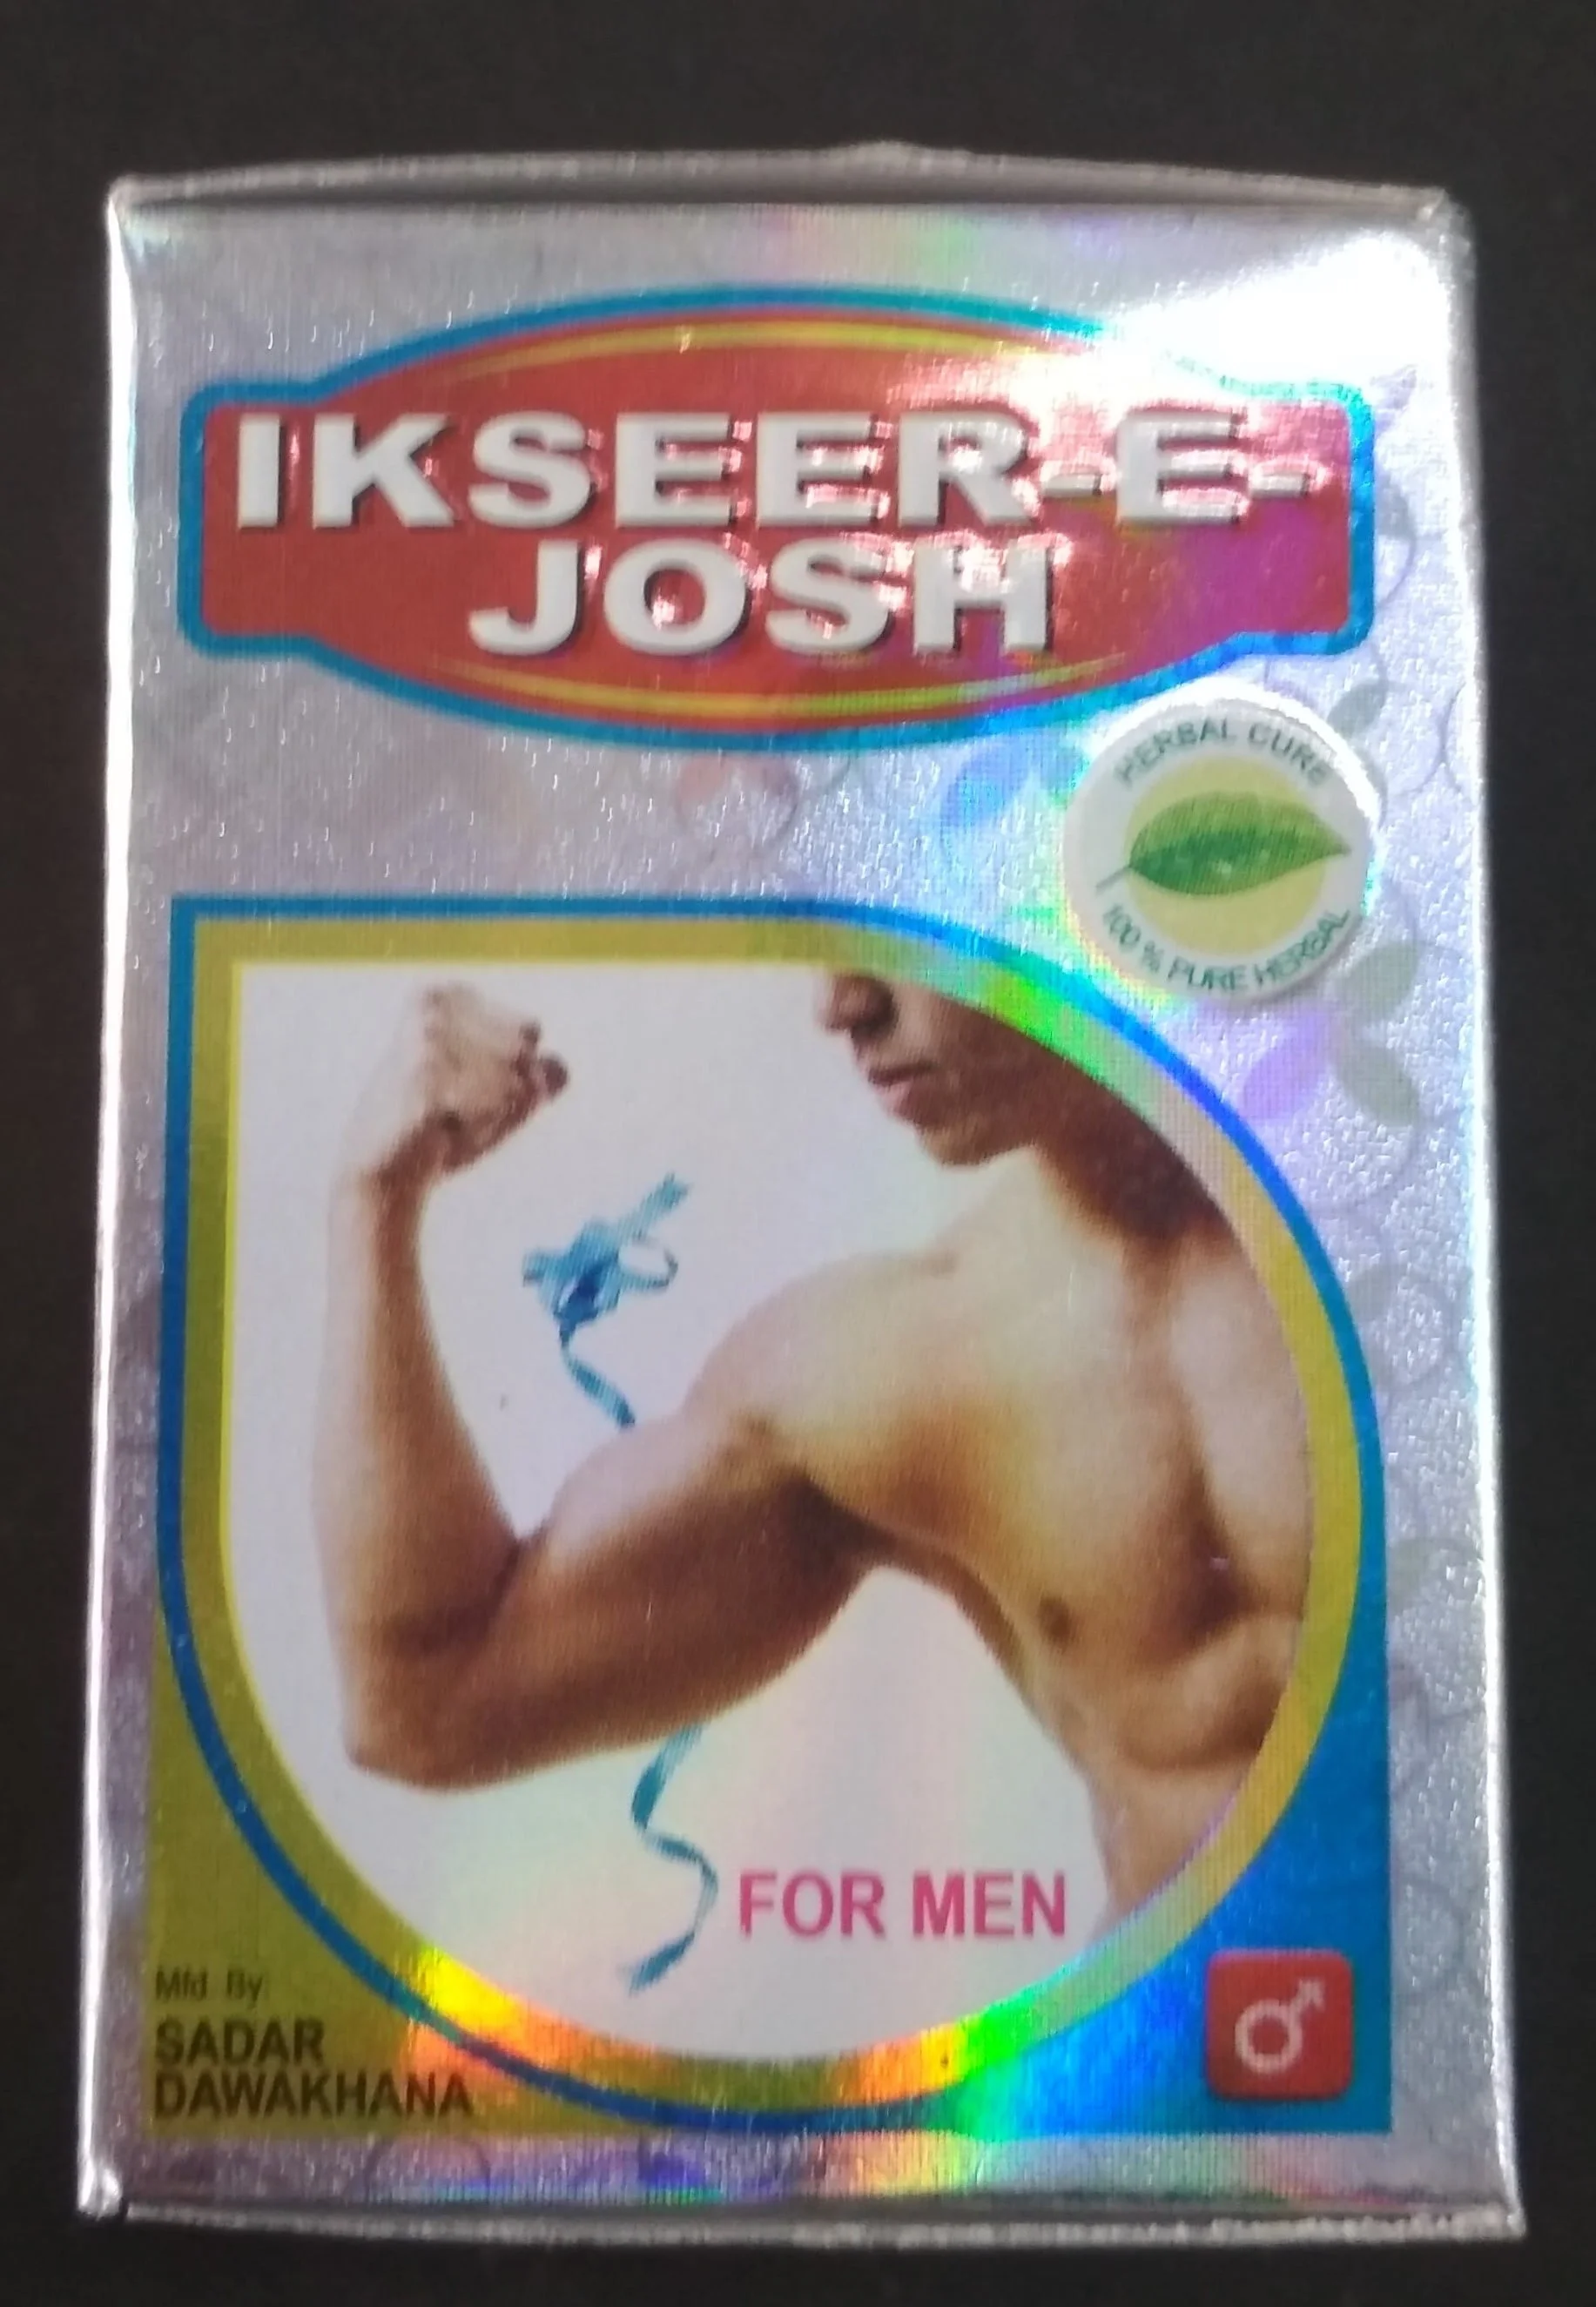 ikseer-E-josh tablets 40 tab Sadar Dawakhana